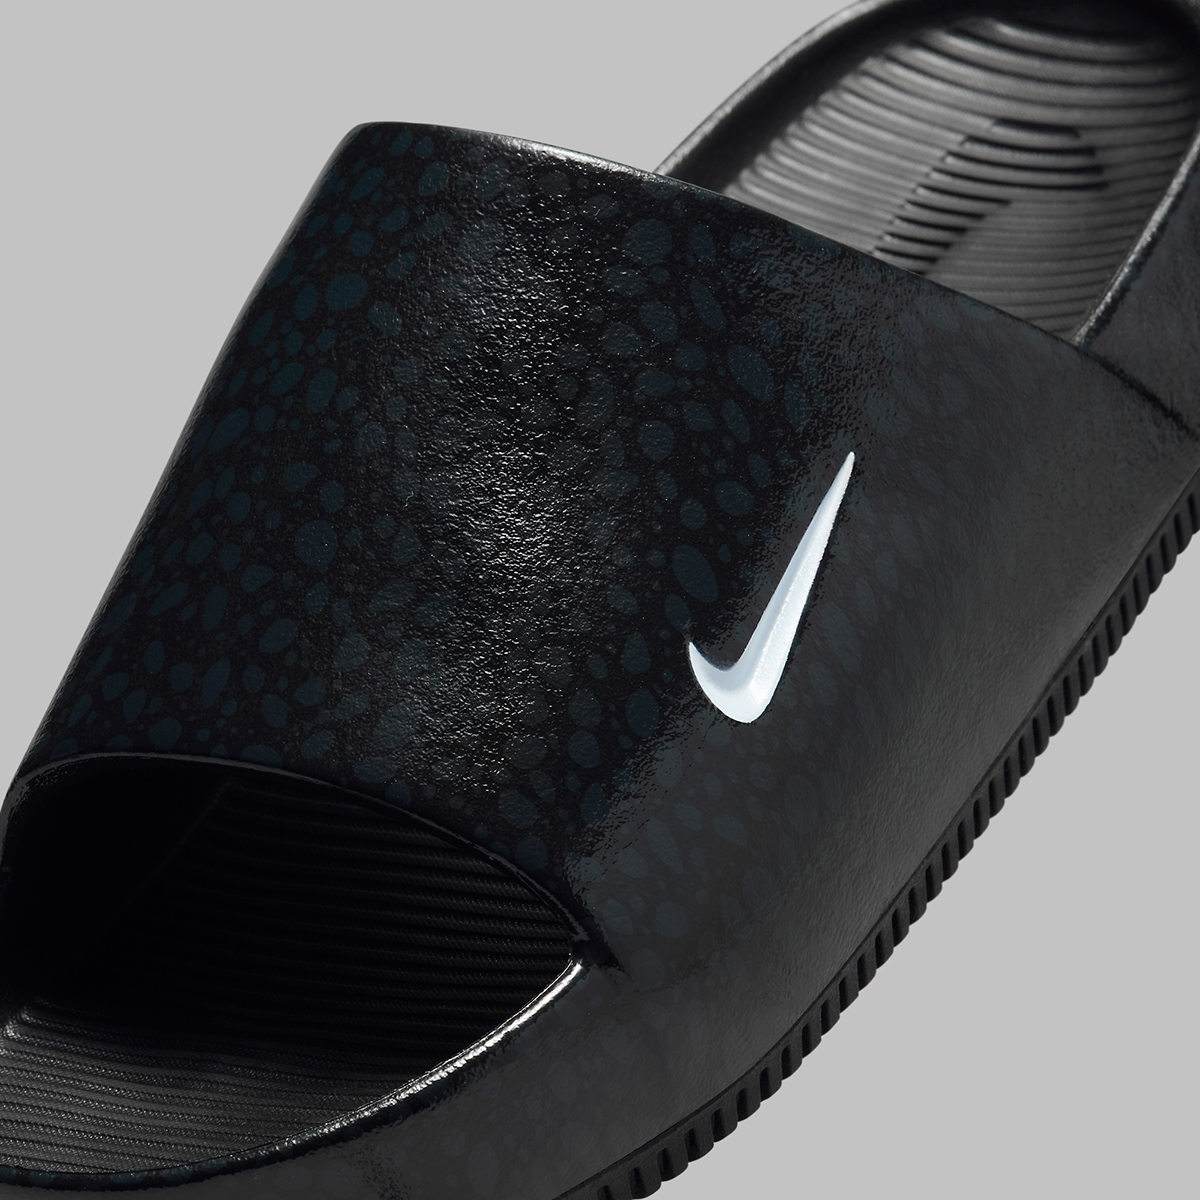 Nike Calm Slide Safari Black Hm5072 001 1